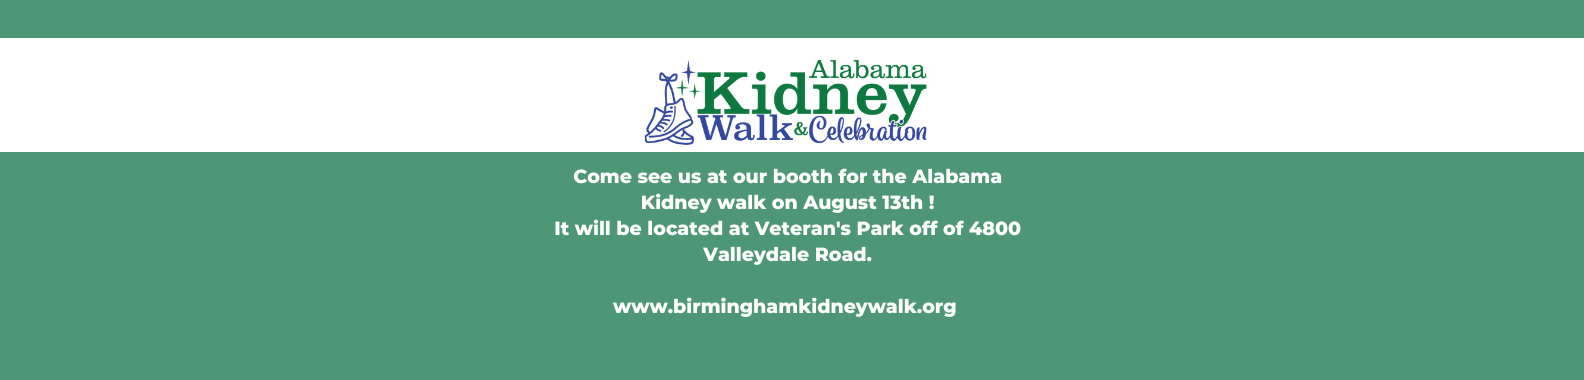 Alabama Kidney Walk